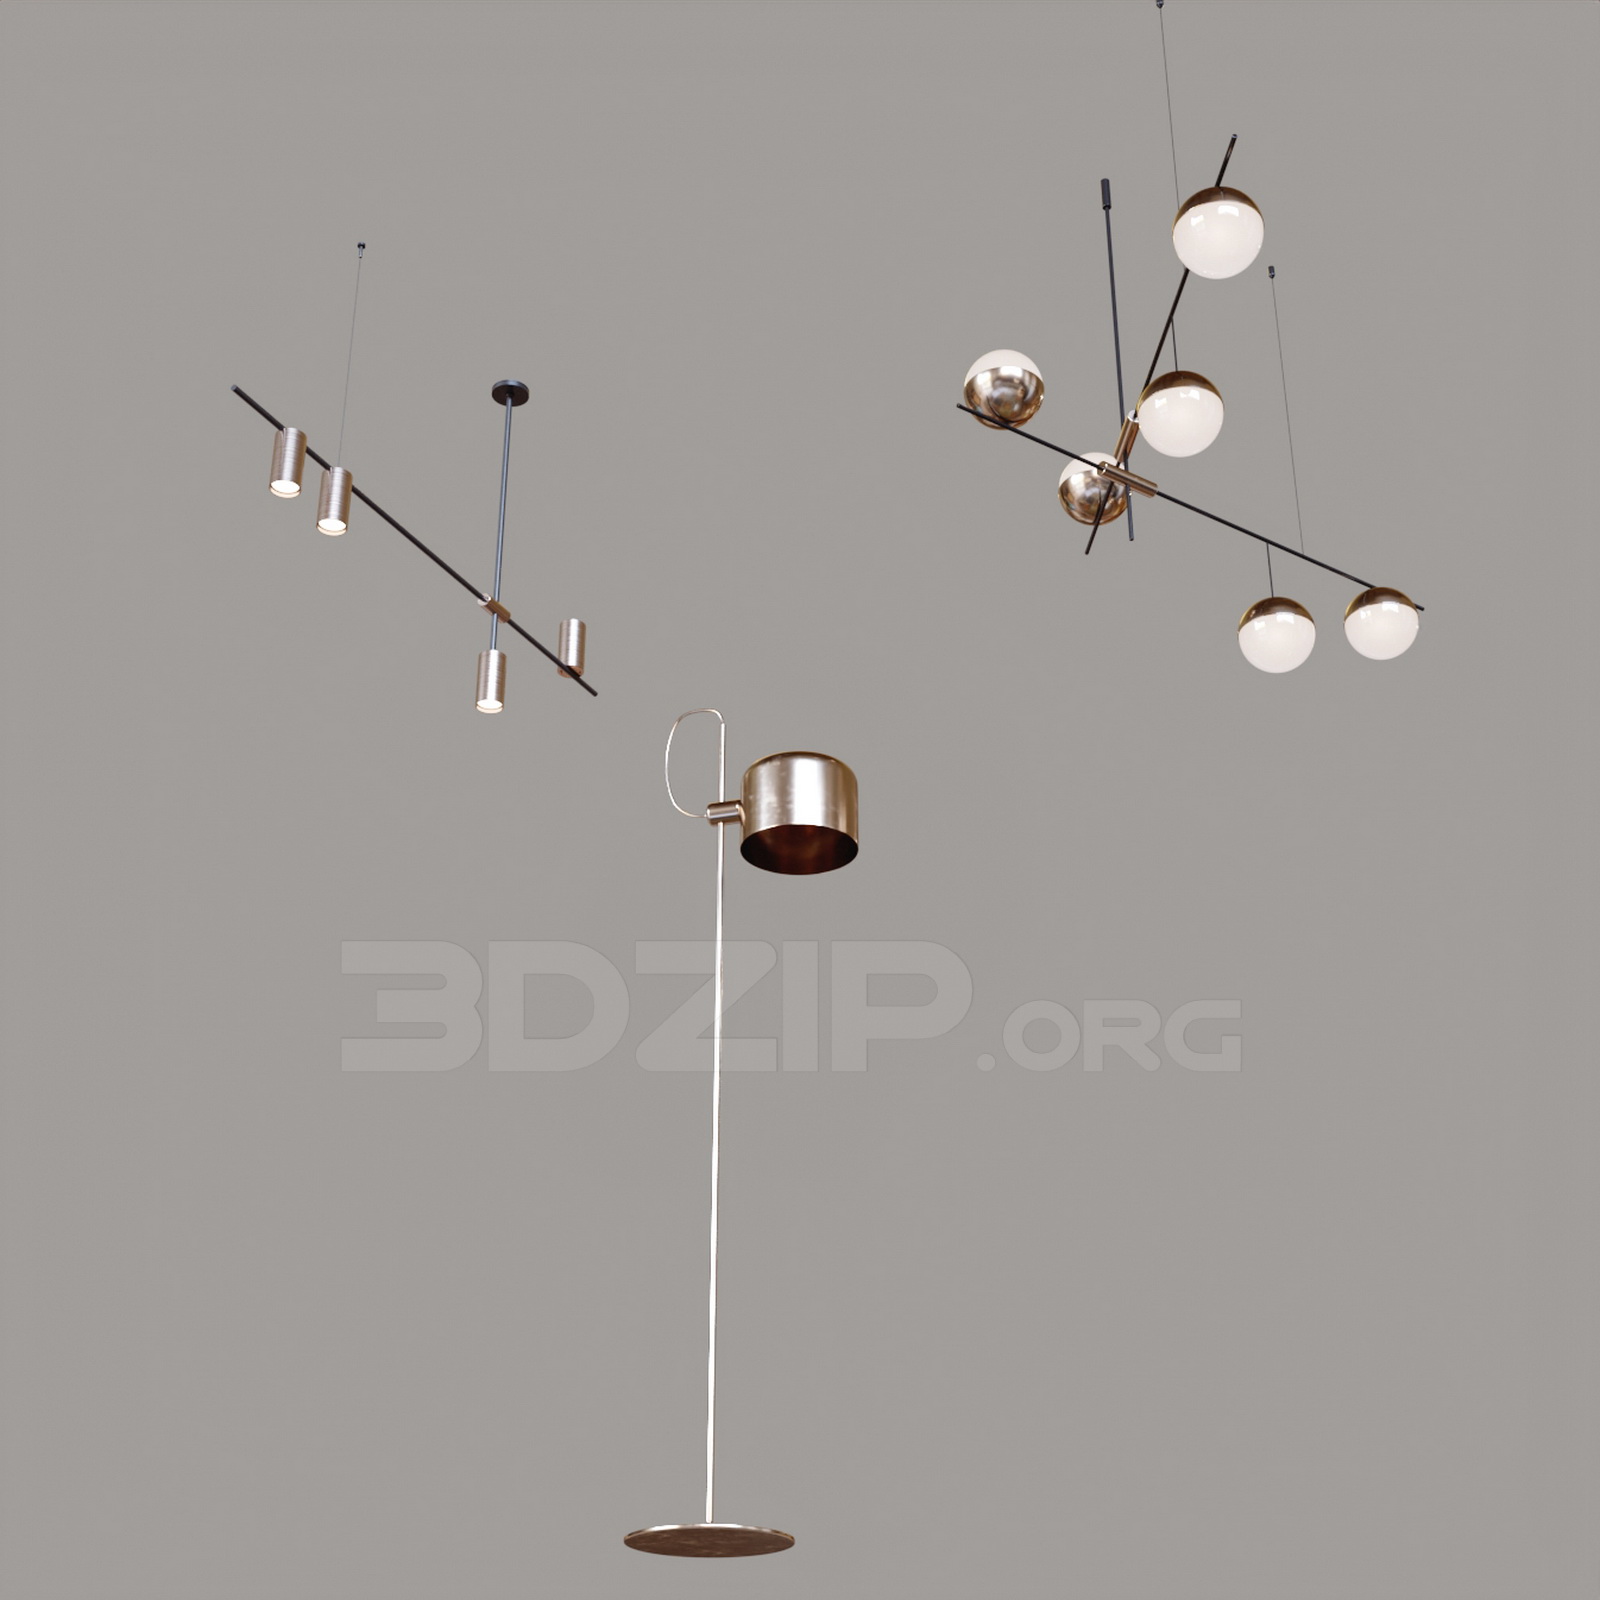 12172. Download Free Ceiling Light Model By Leo Nguyen